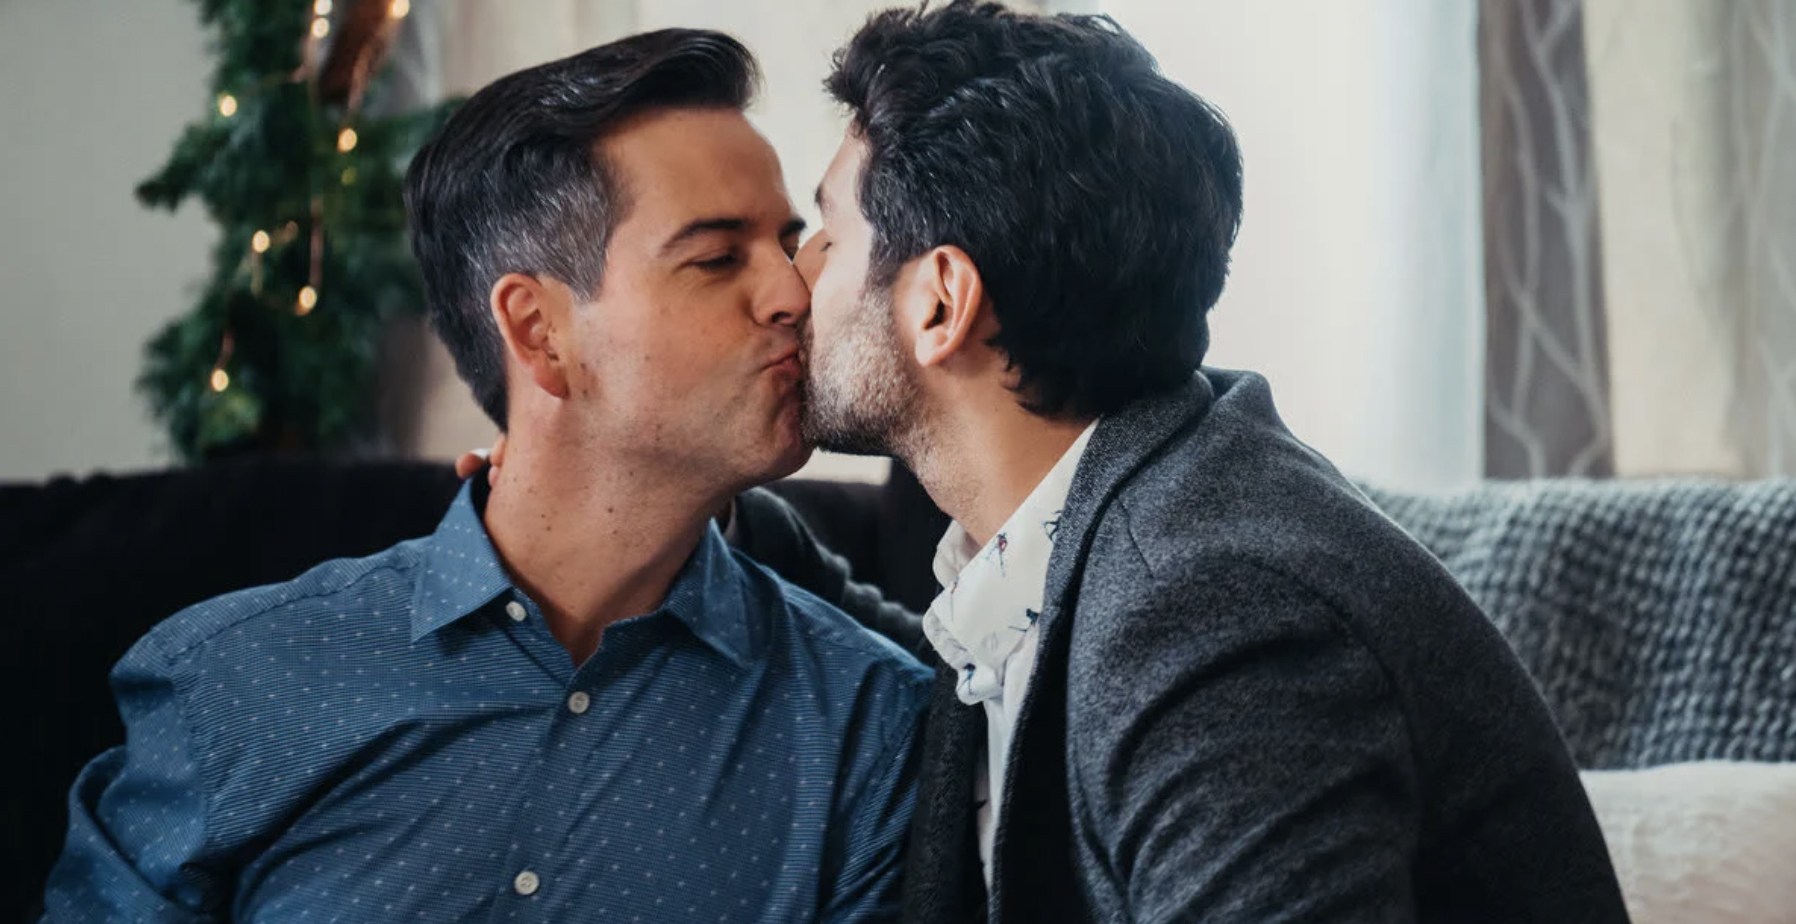 Lifetime announces 1st holiday movie centered around same-sex couple